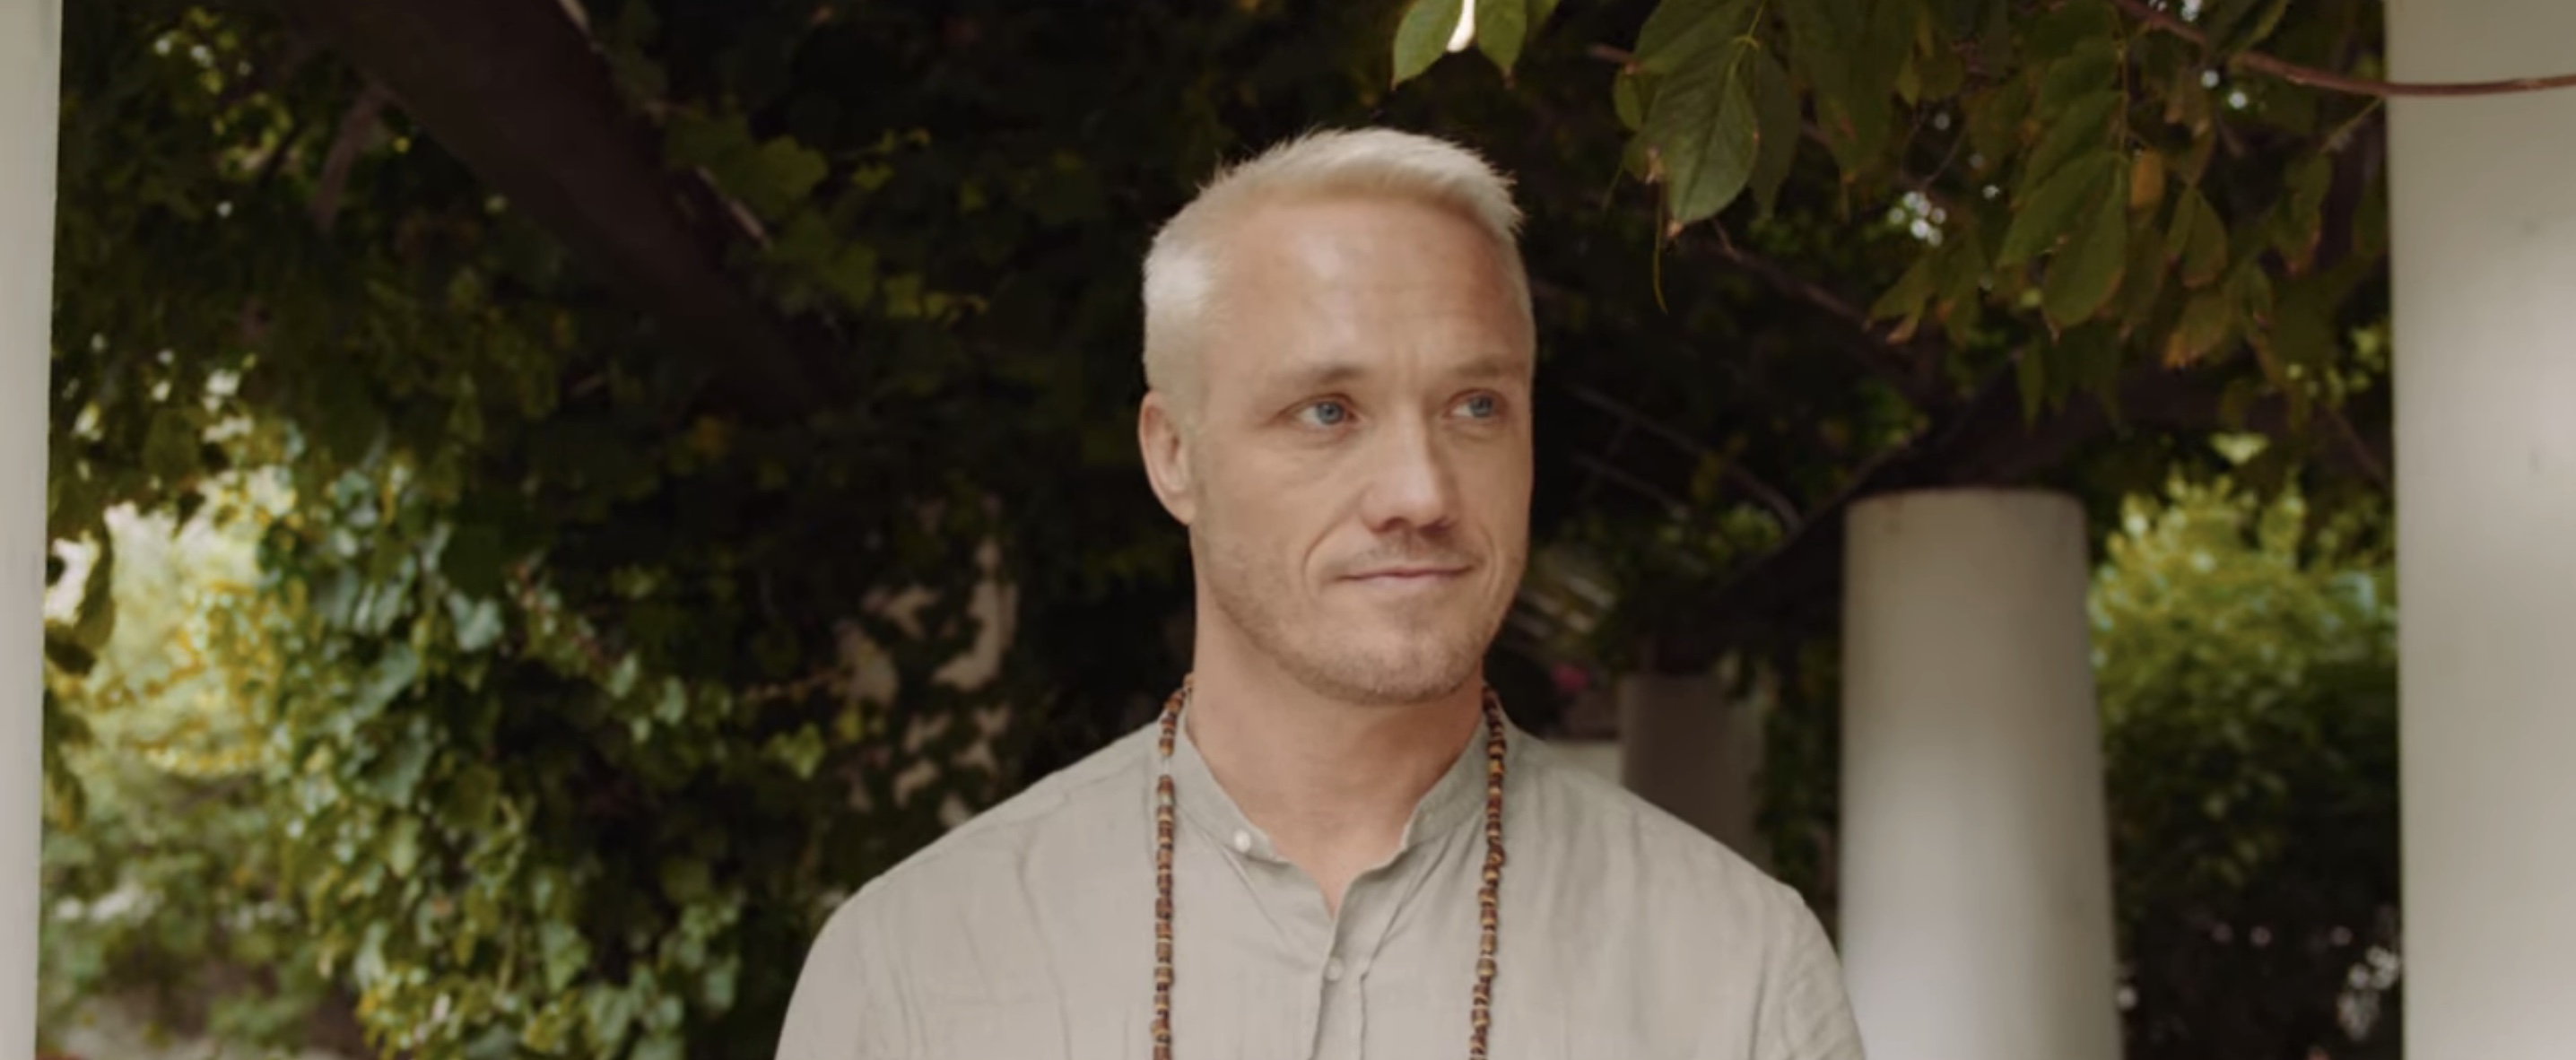 Stromboli Cast on Netflix - Christian Hillborg as Jens